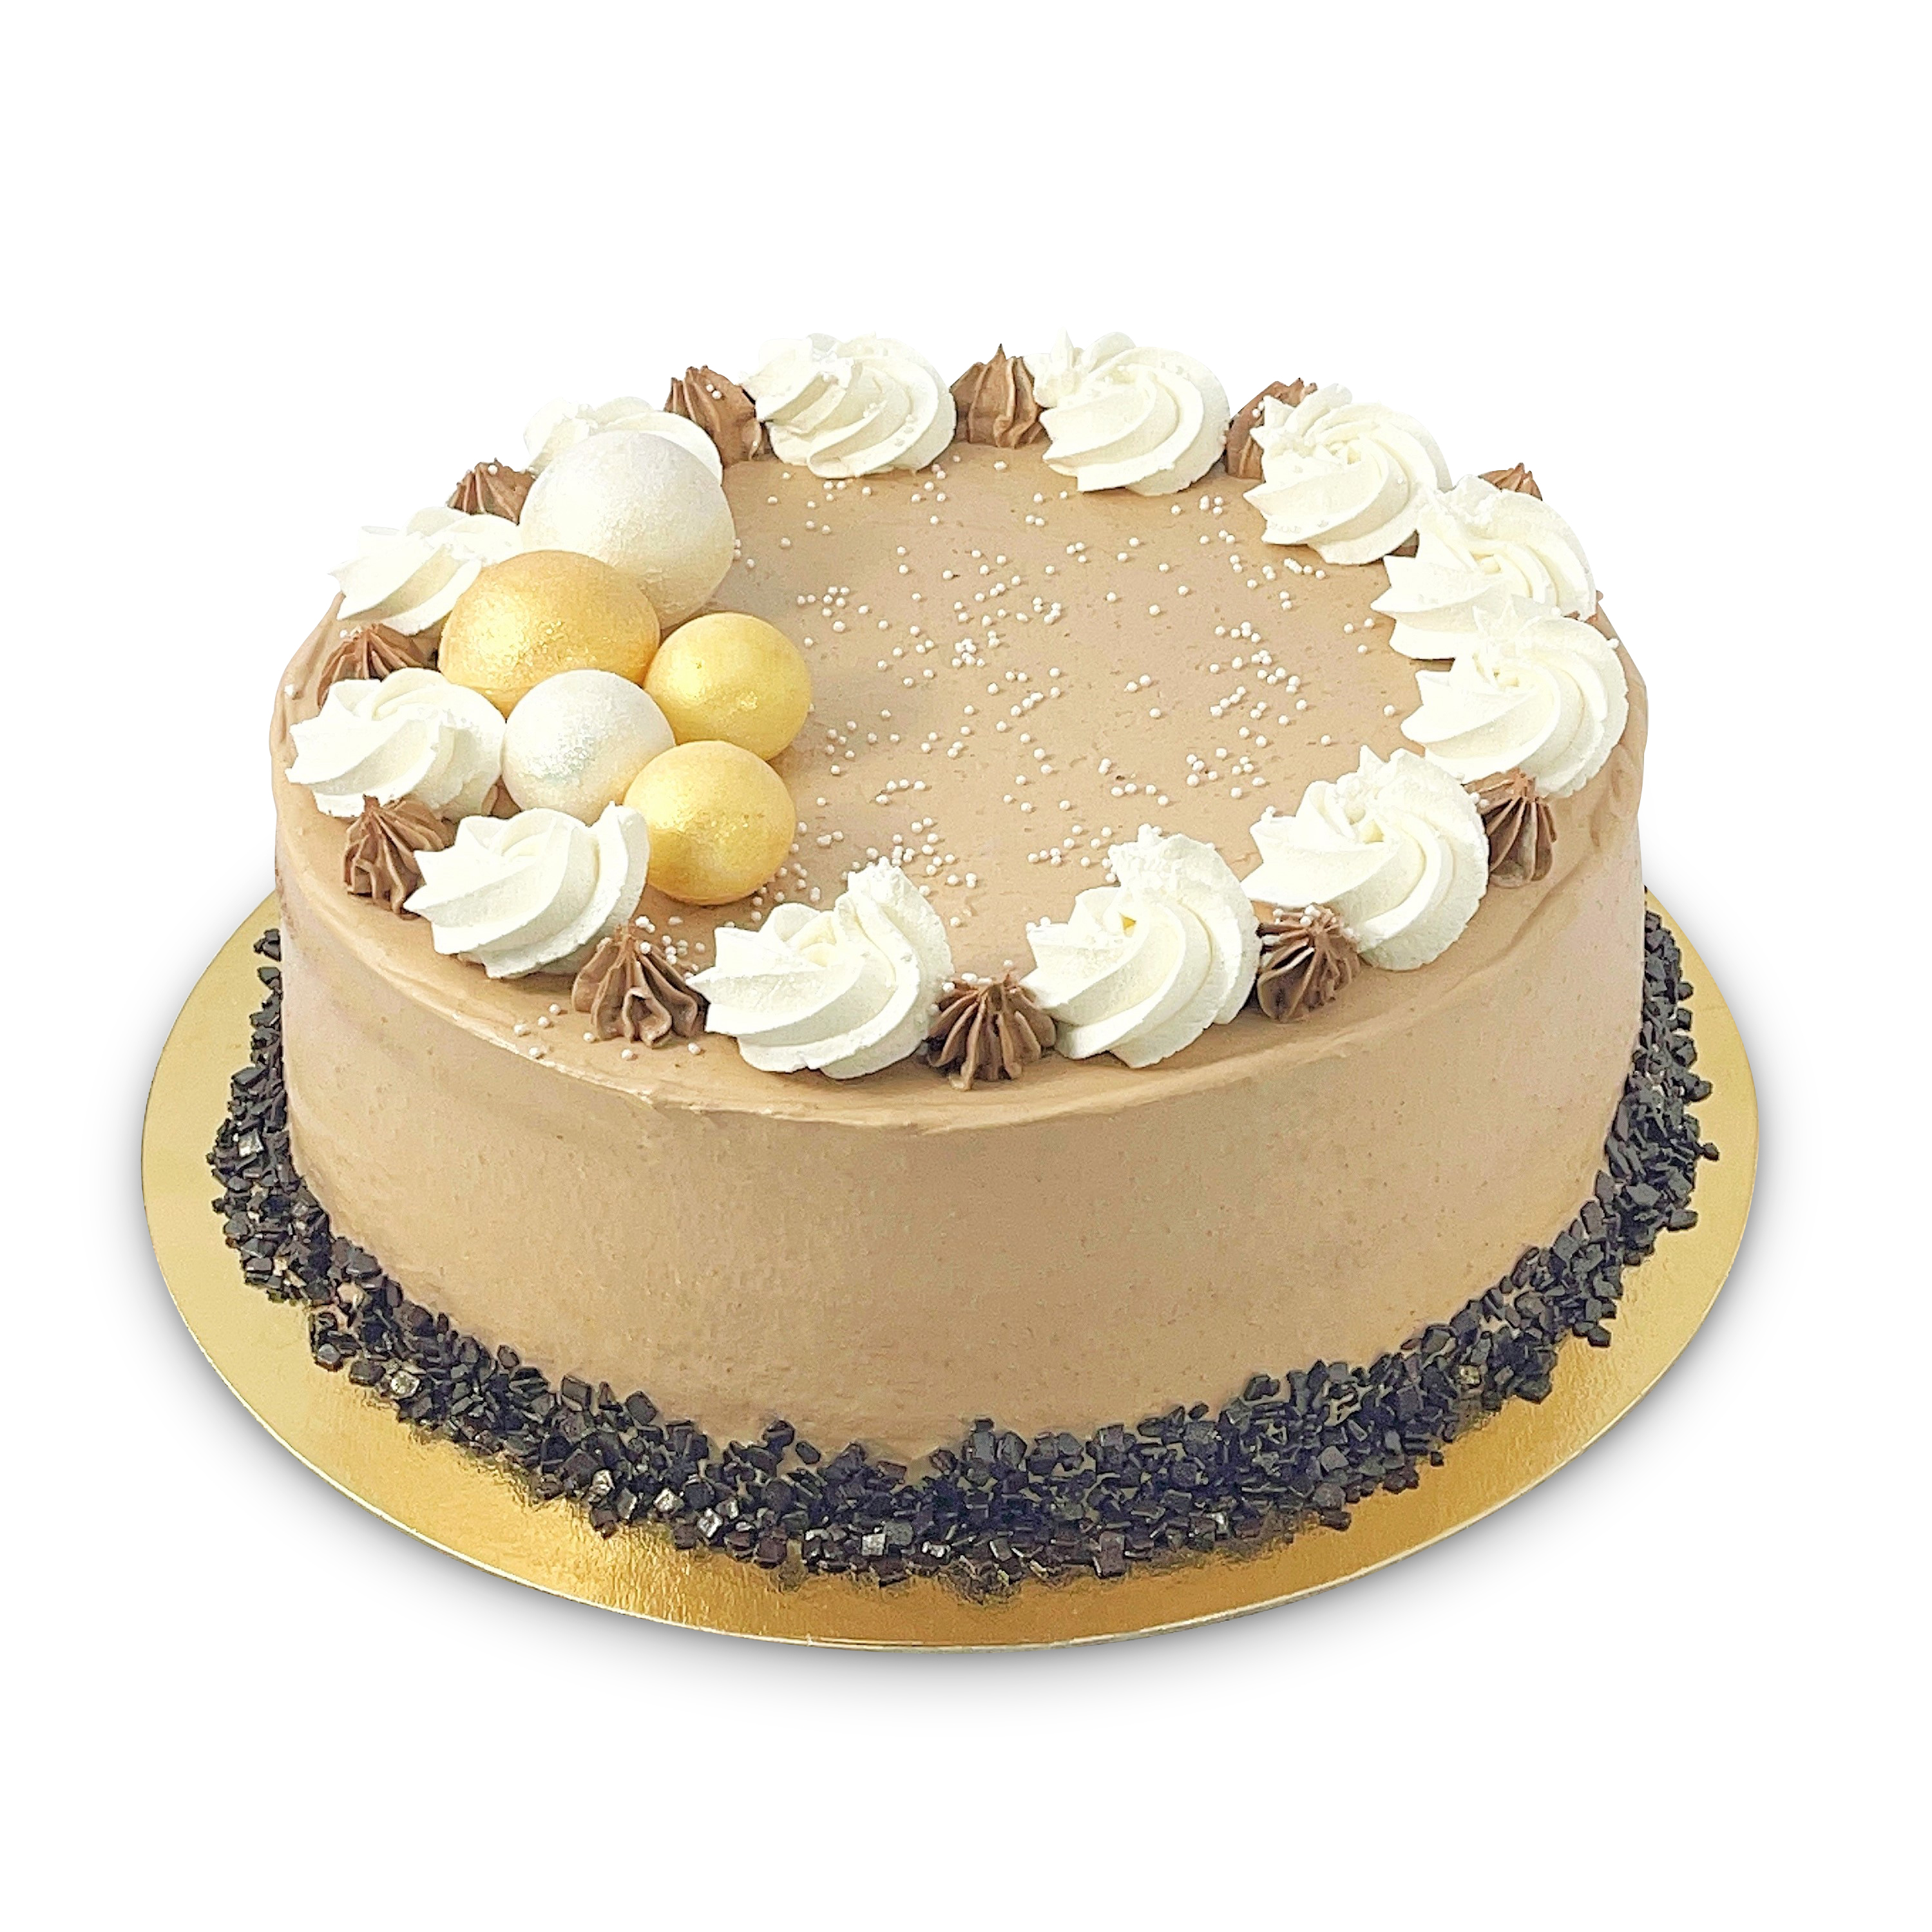 Rana’s Schokoladen-Rahm-Torte